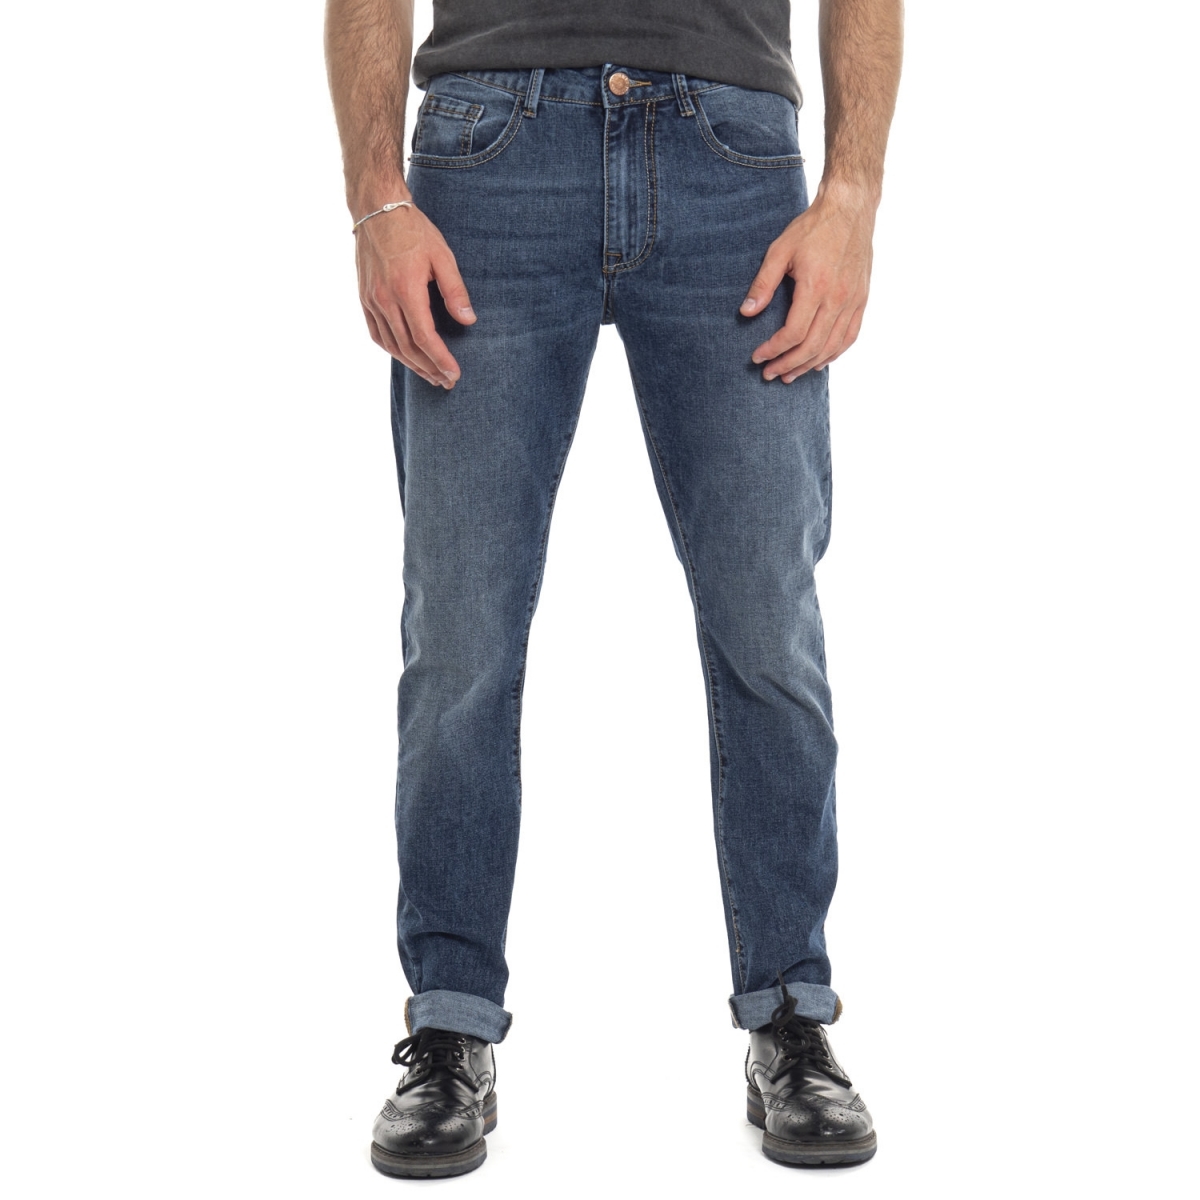 Kleidung Jeans mann Jeans ATM1088-2 LANDEK PARK Cafedelmar Shop